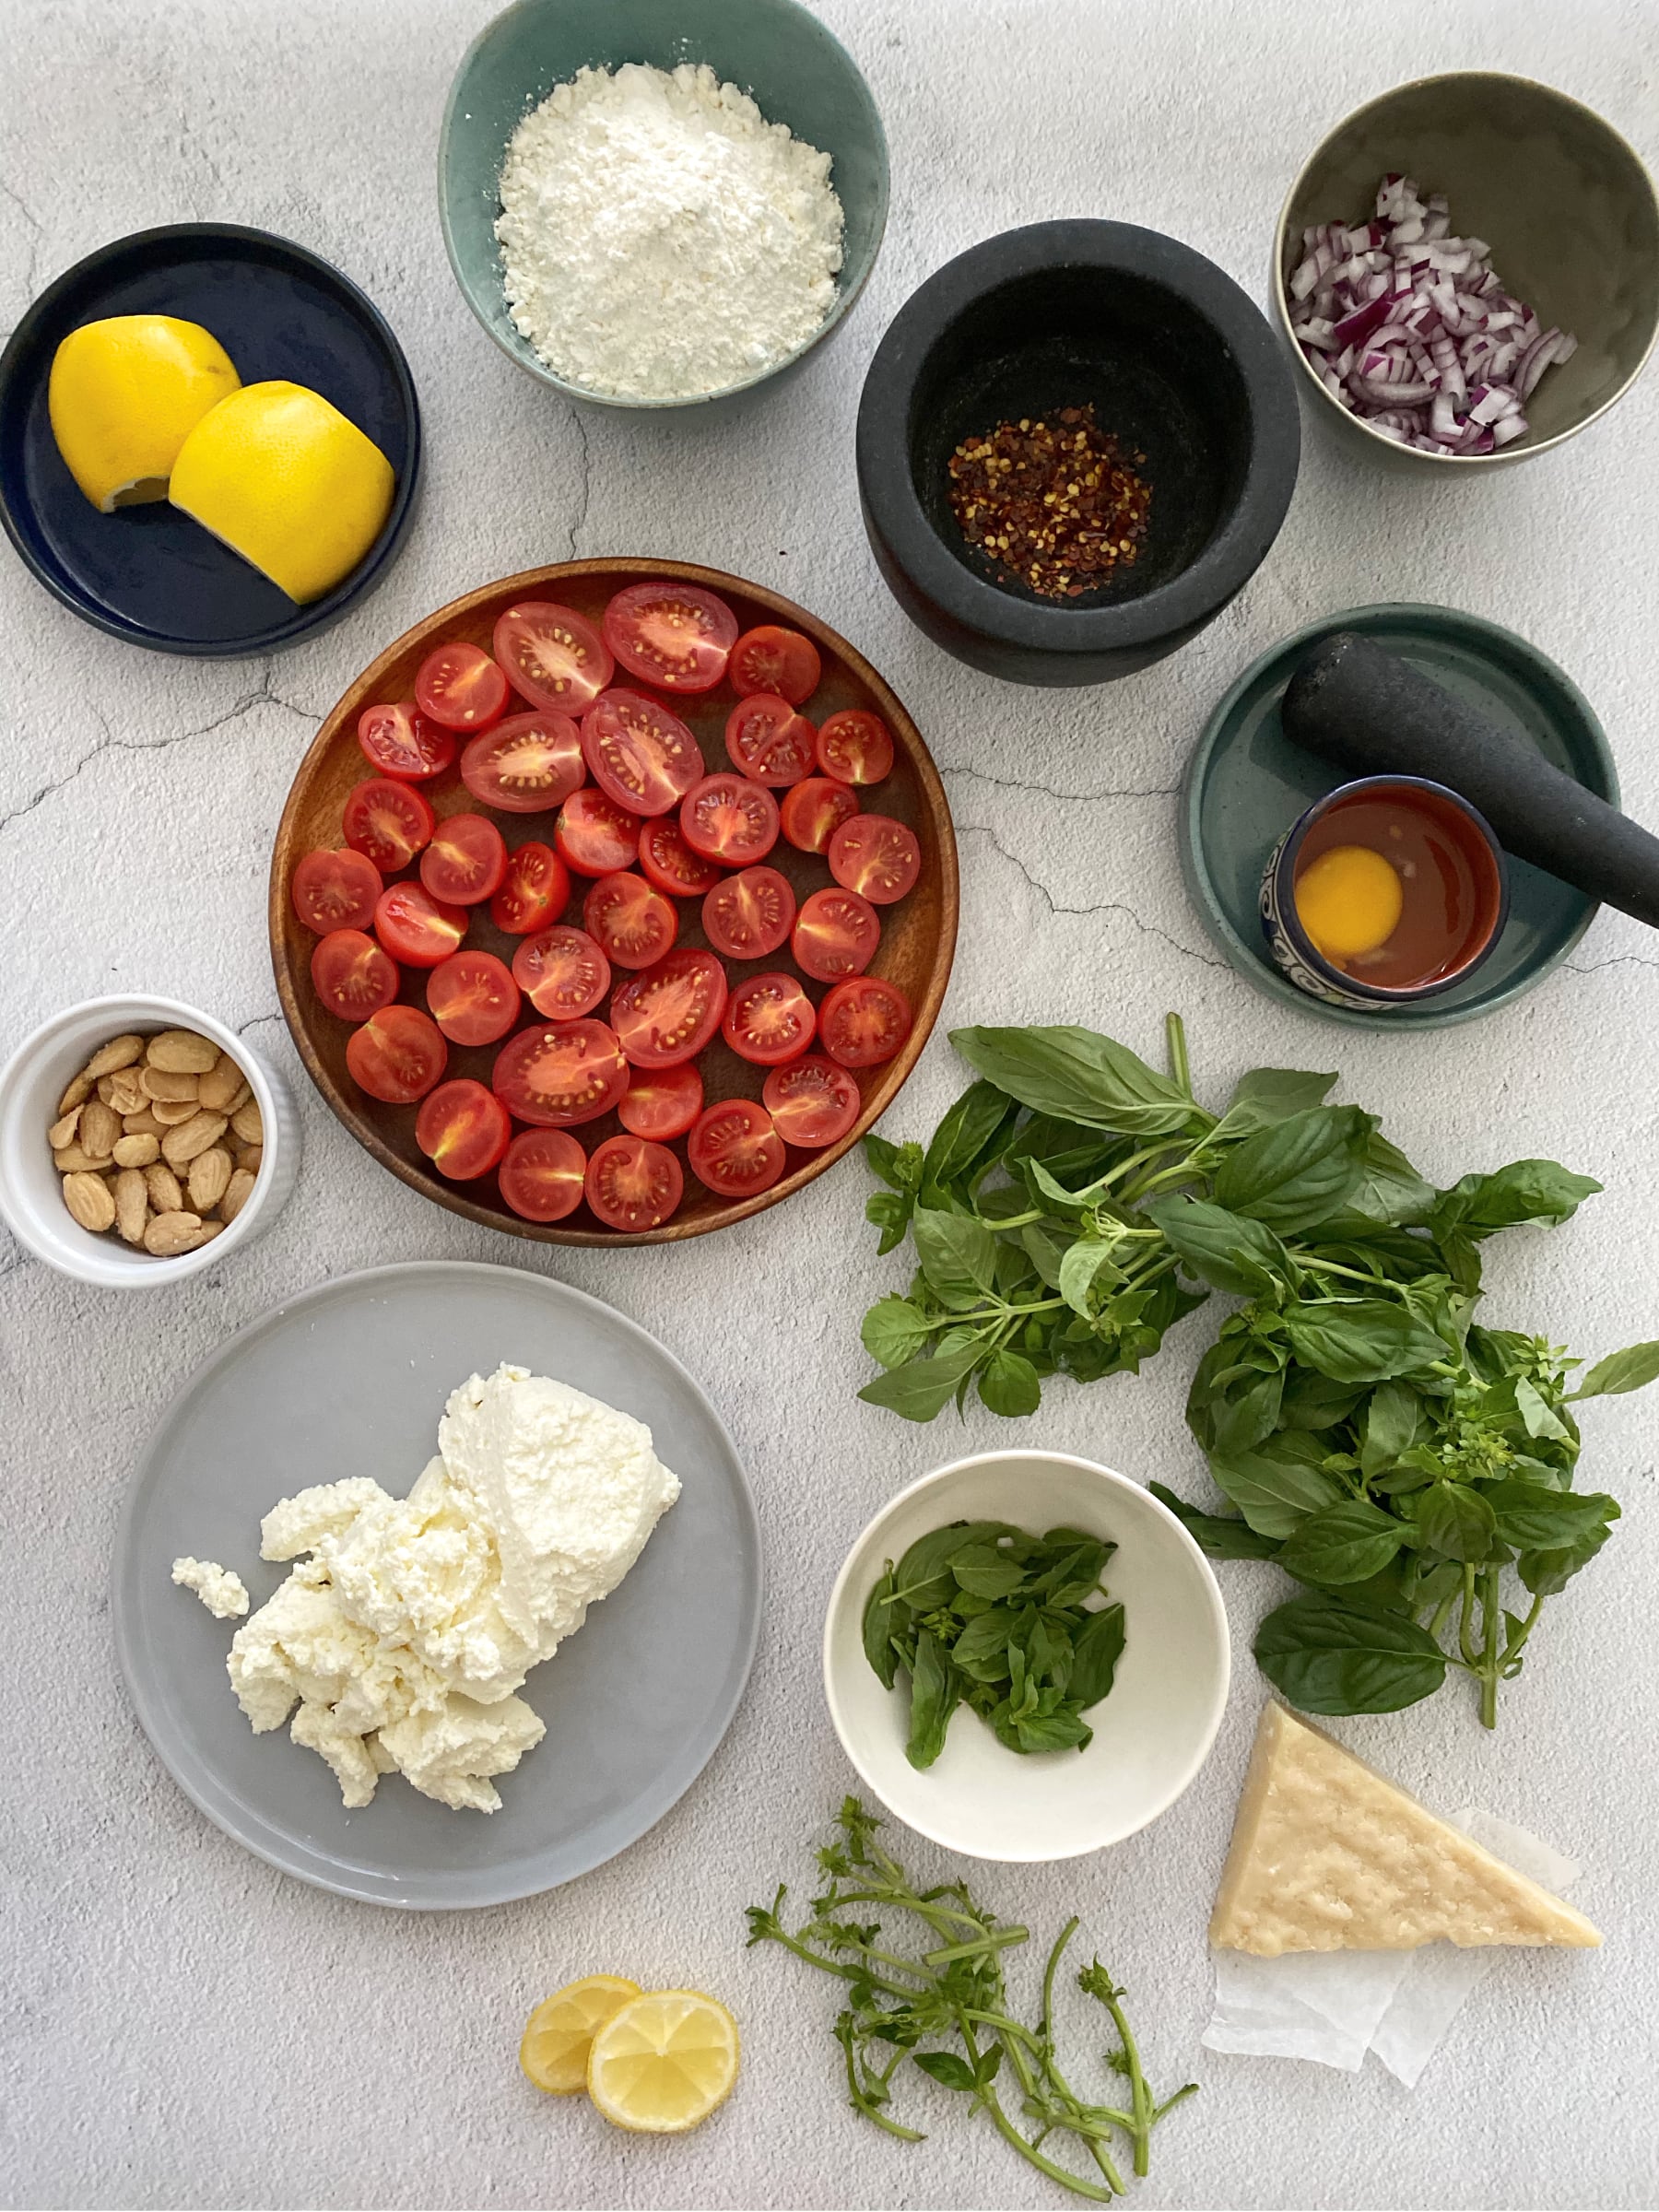 Ingredients for ricotta gnocchi